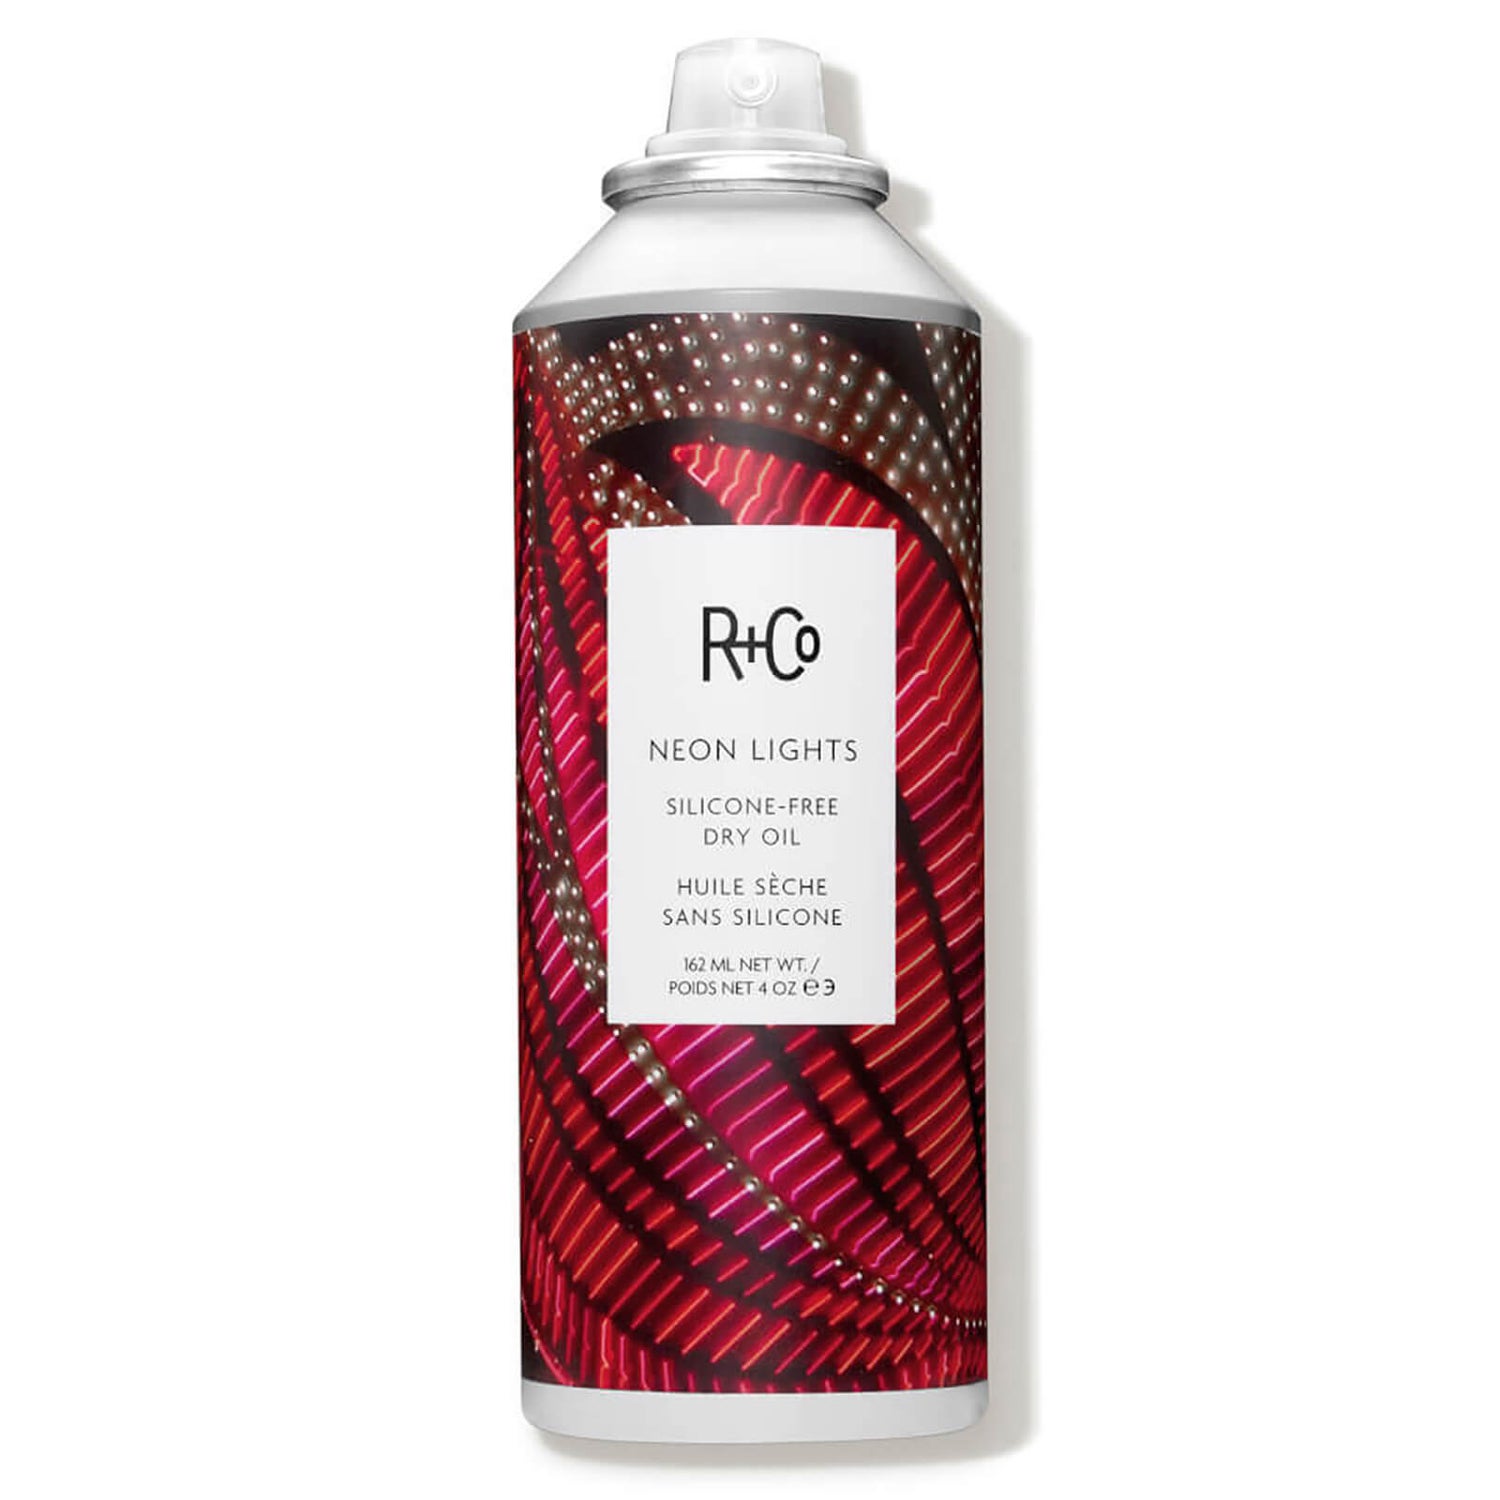 R+Co NEON LIGHTS Dry Oil Spray (4 oz.)